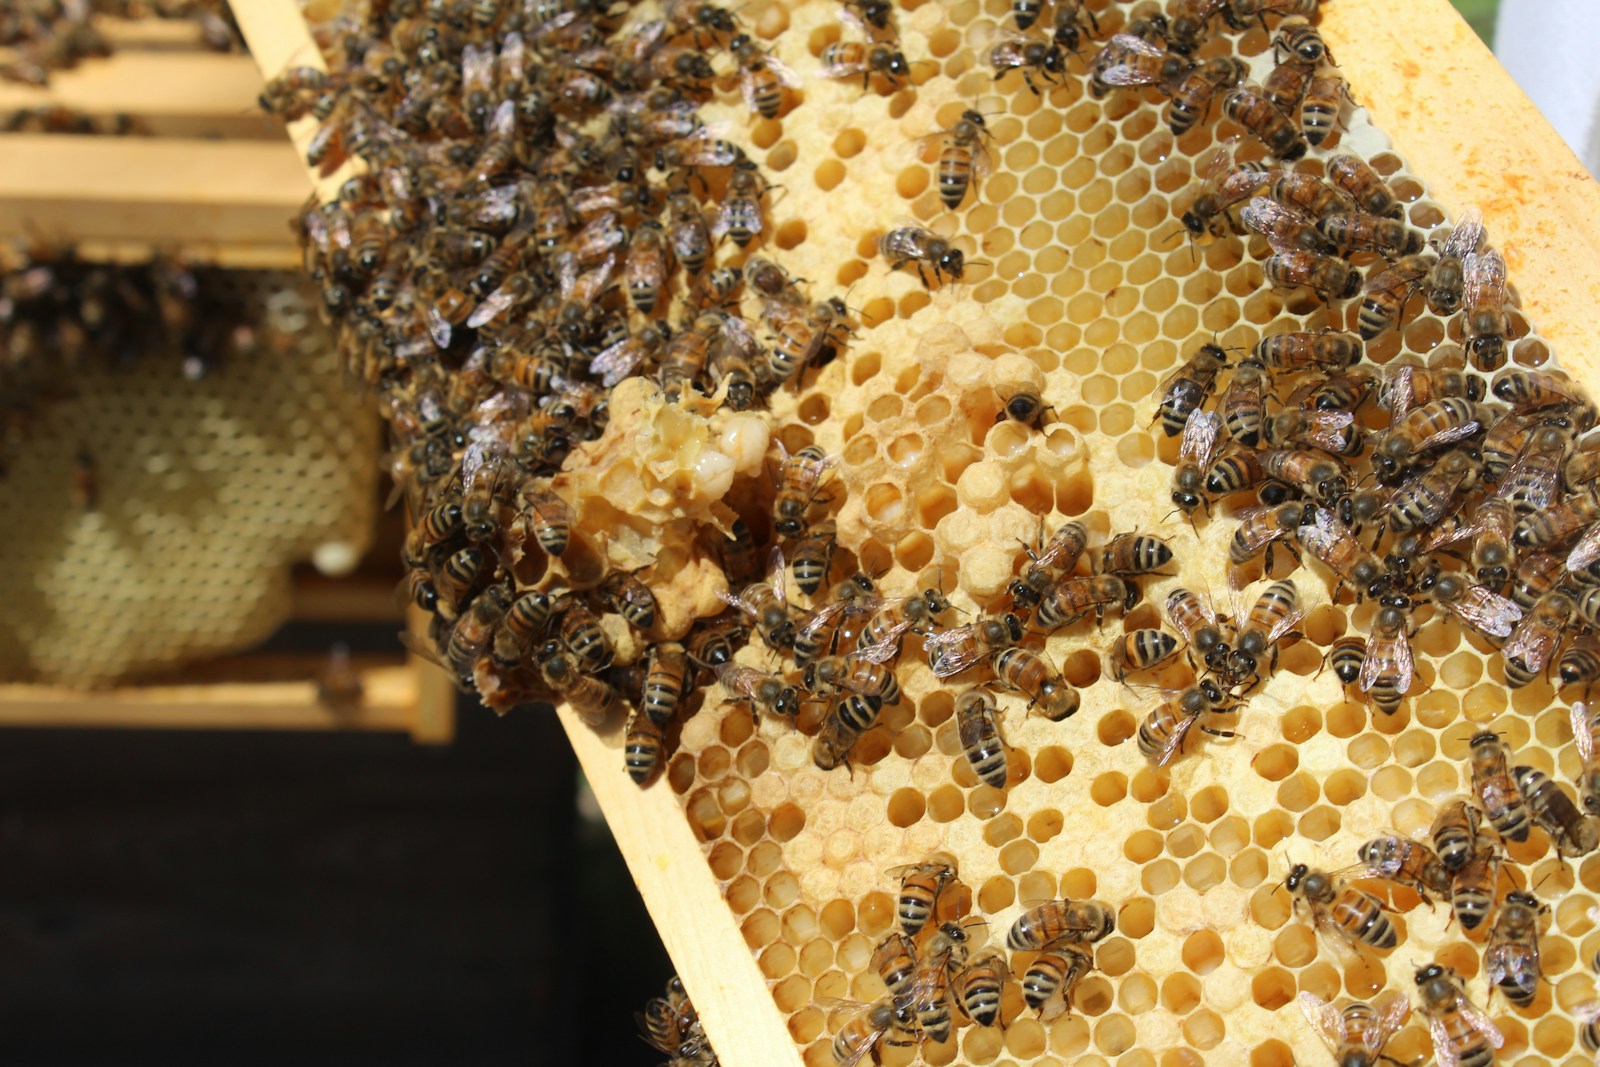 Are Honey Bees Going Extinct